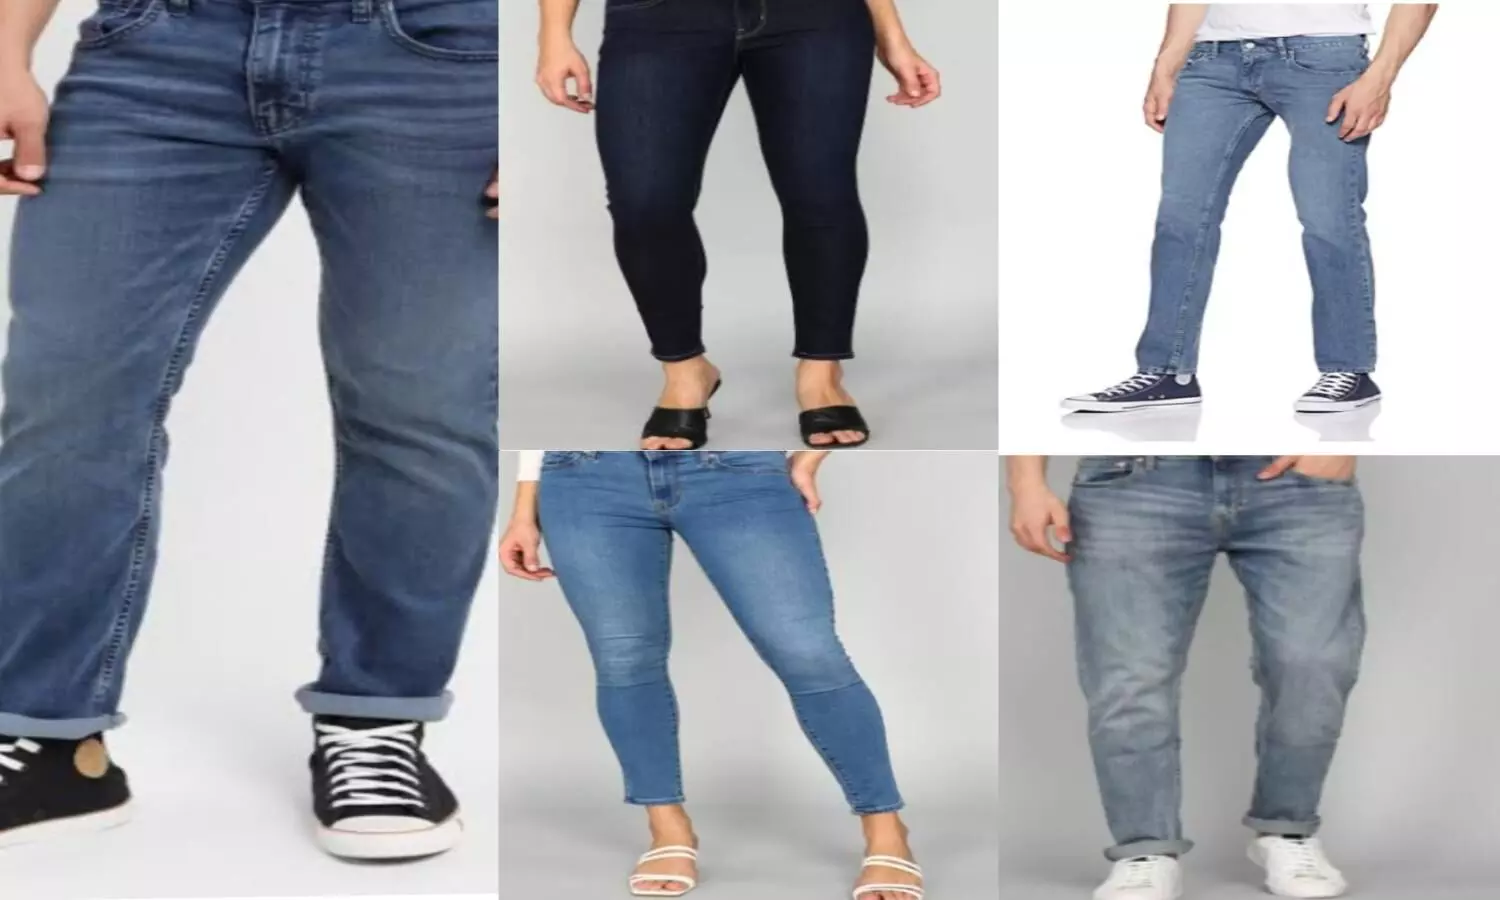 Levis Jeans For Women